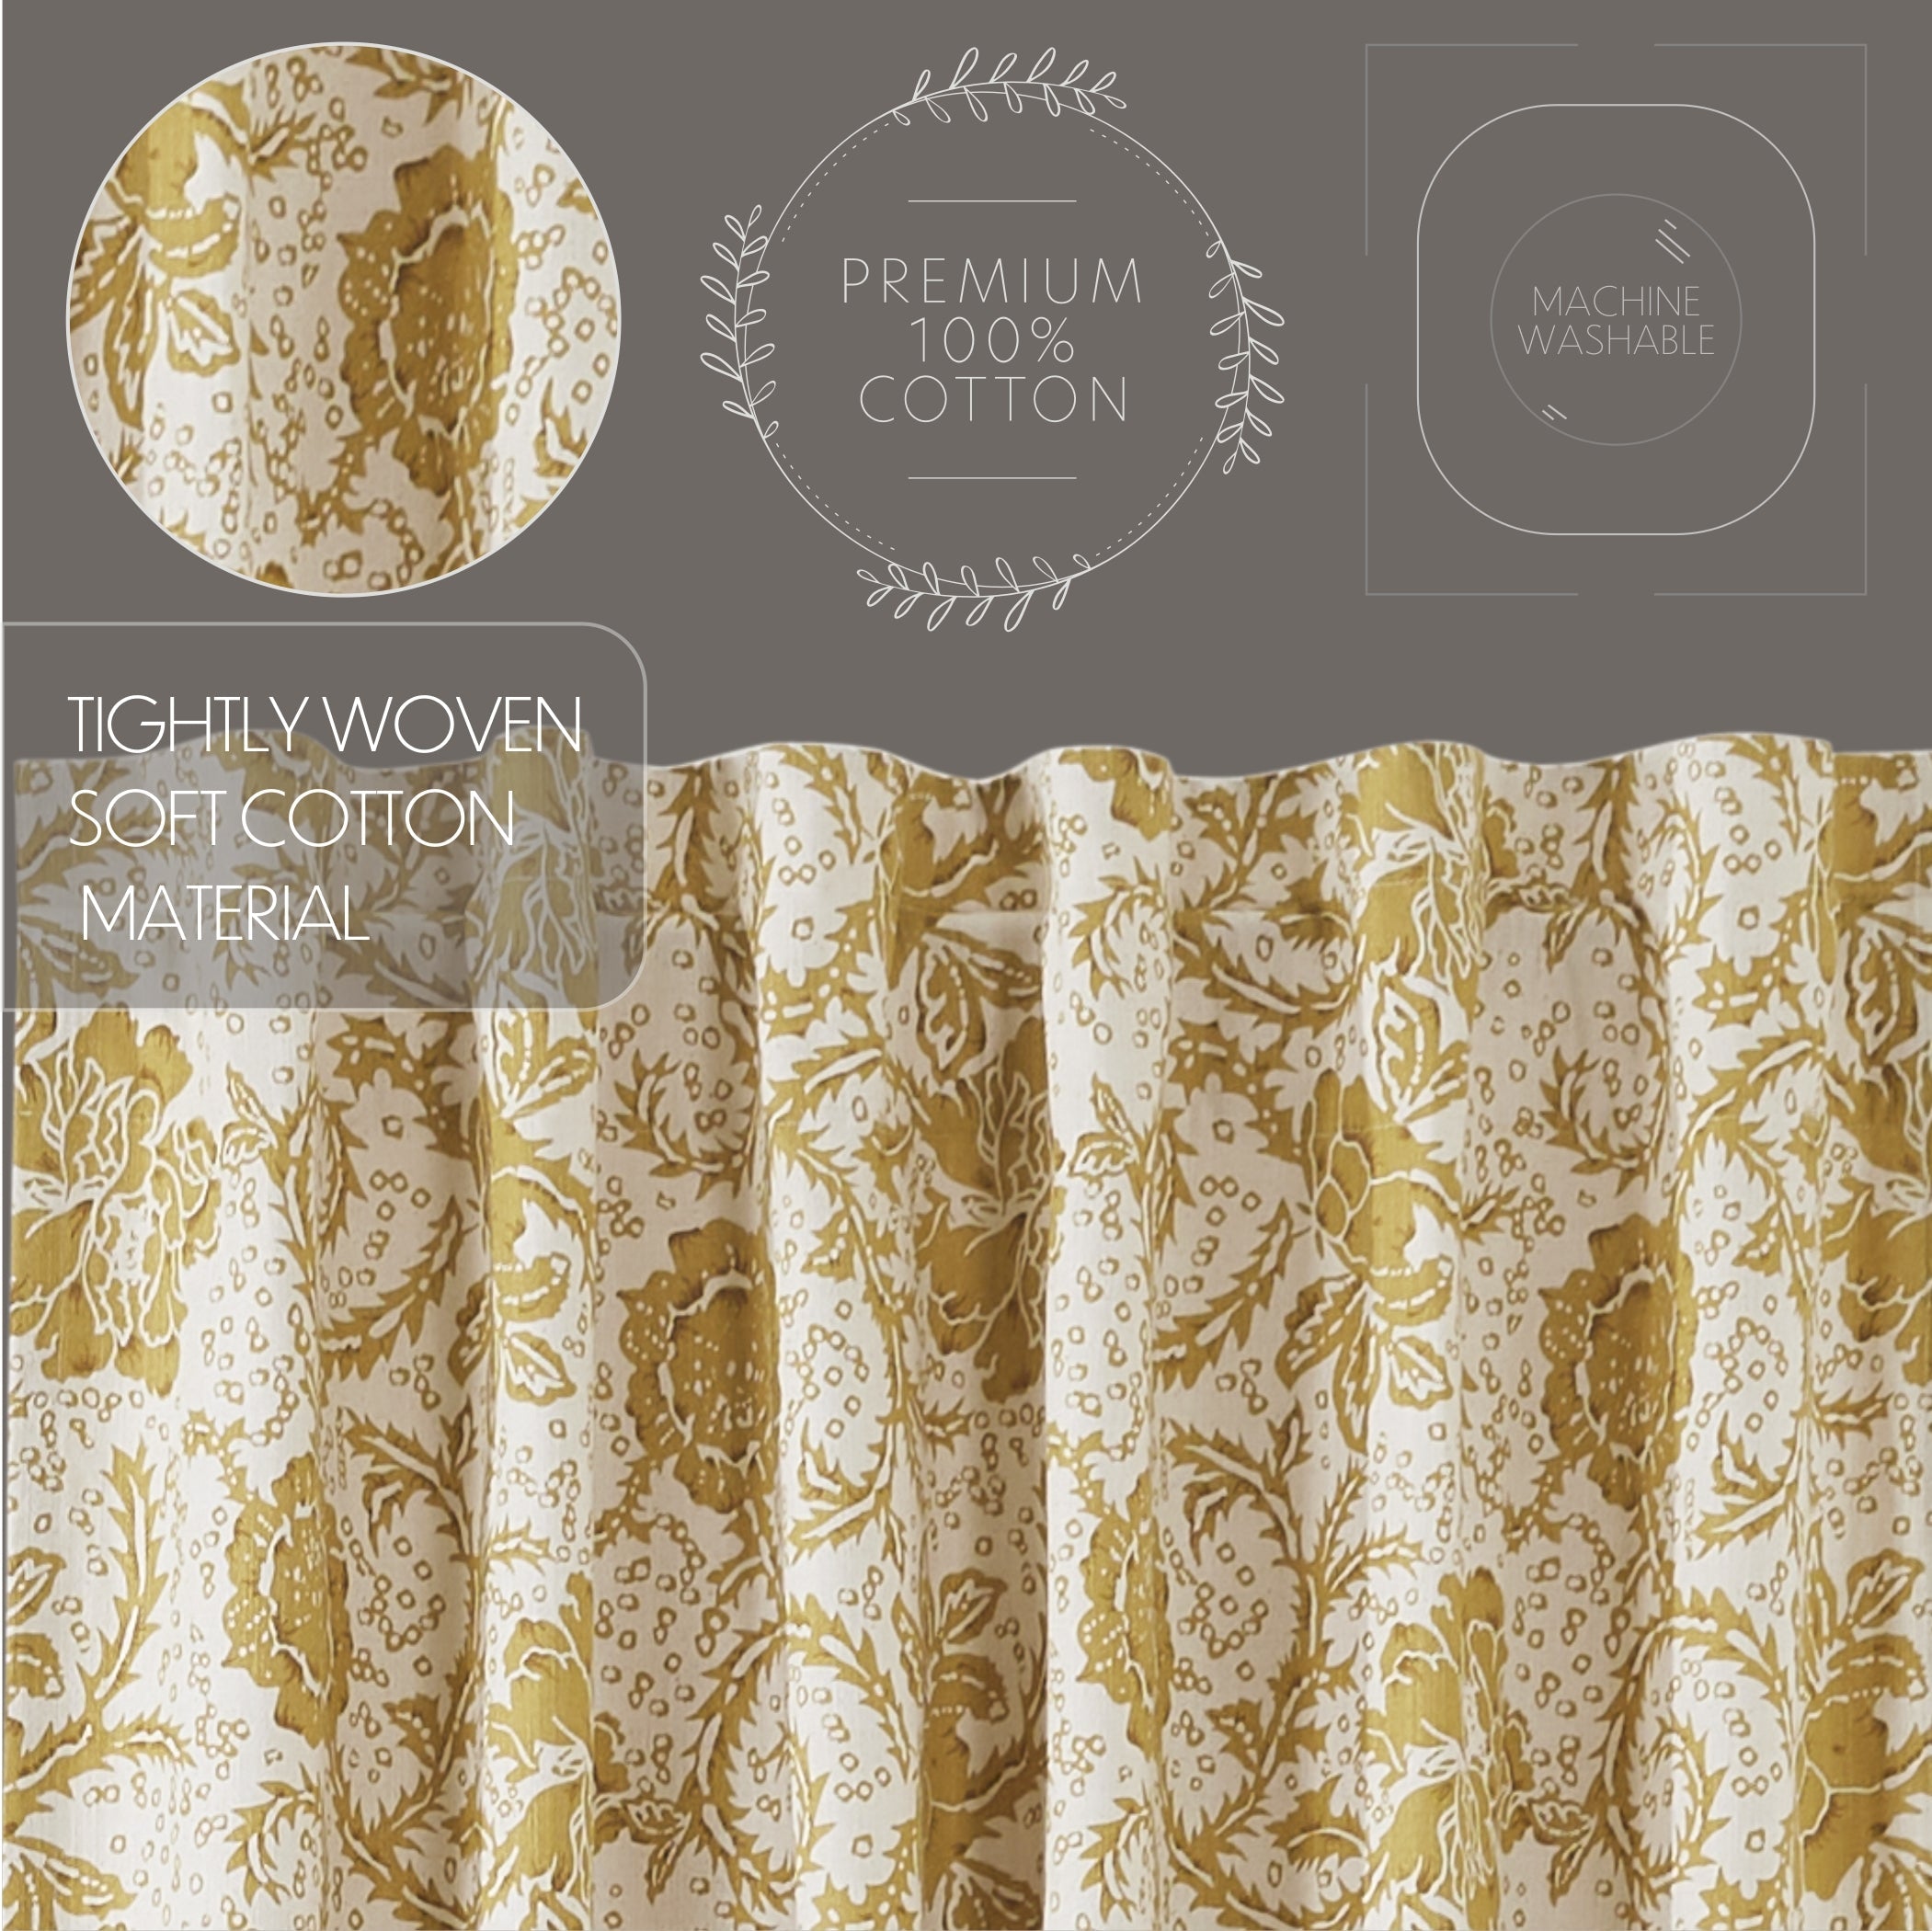 Dorset Gold Floral Prairie Short Panel Set of 2 63x36x18 VHC Brands